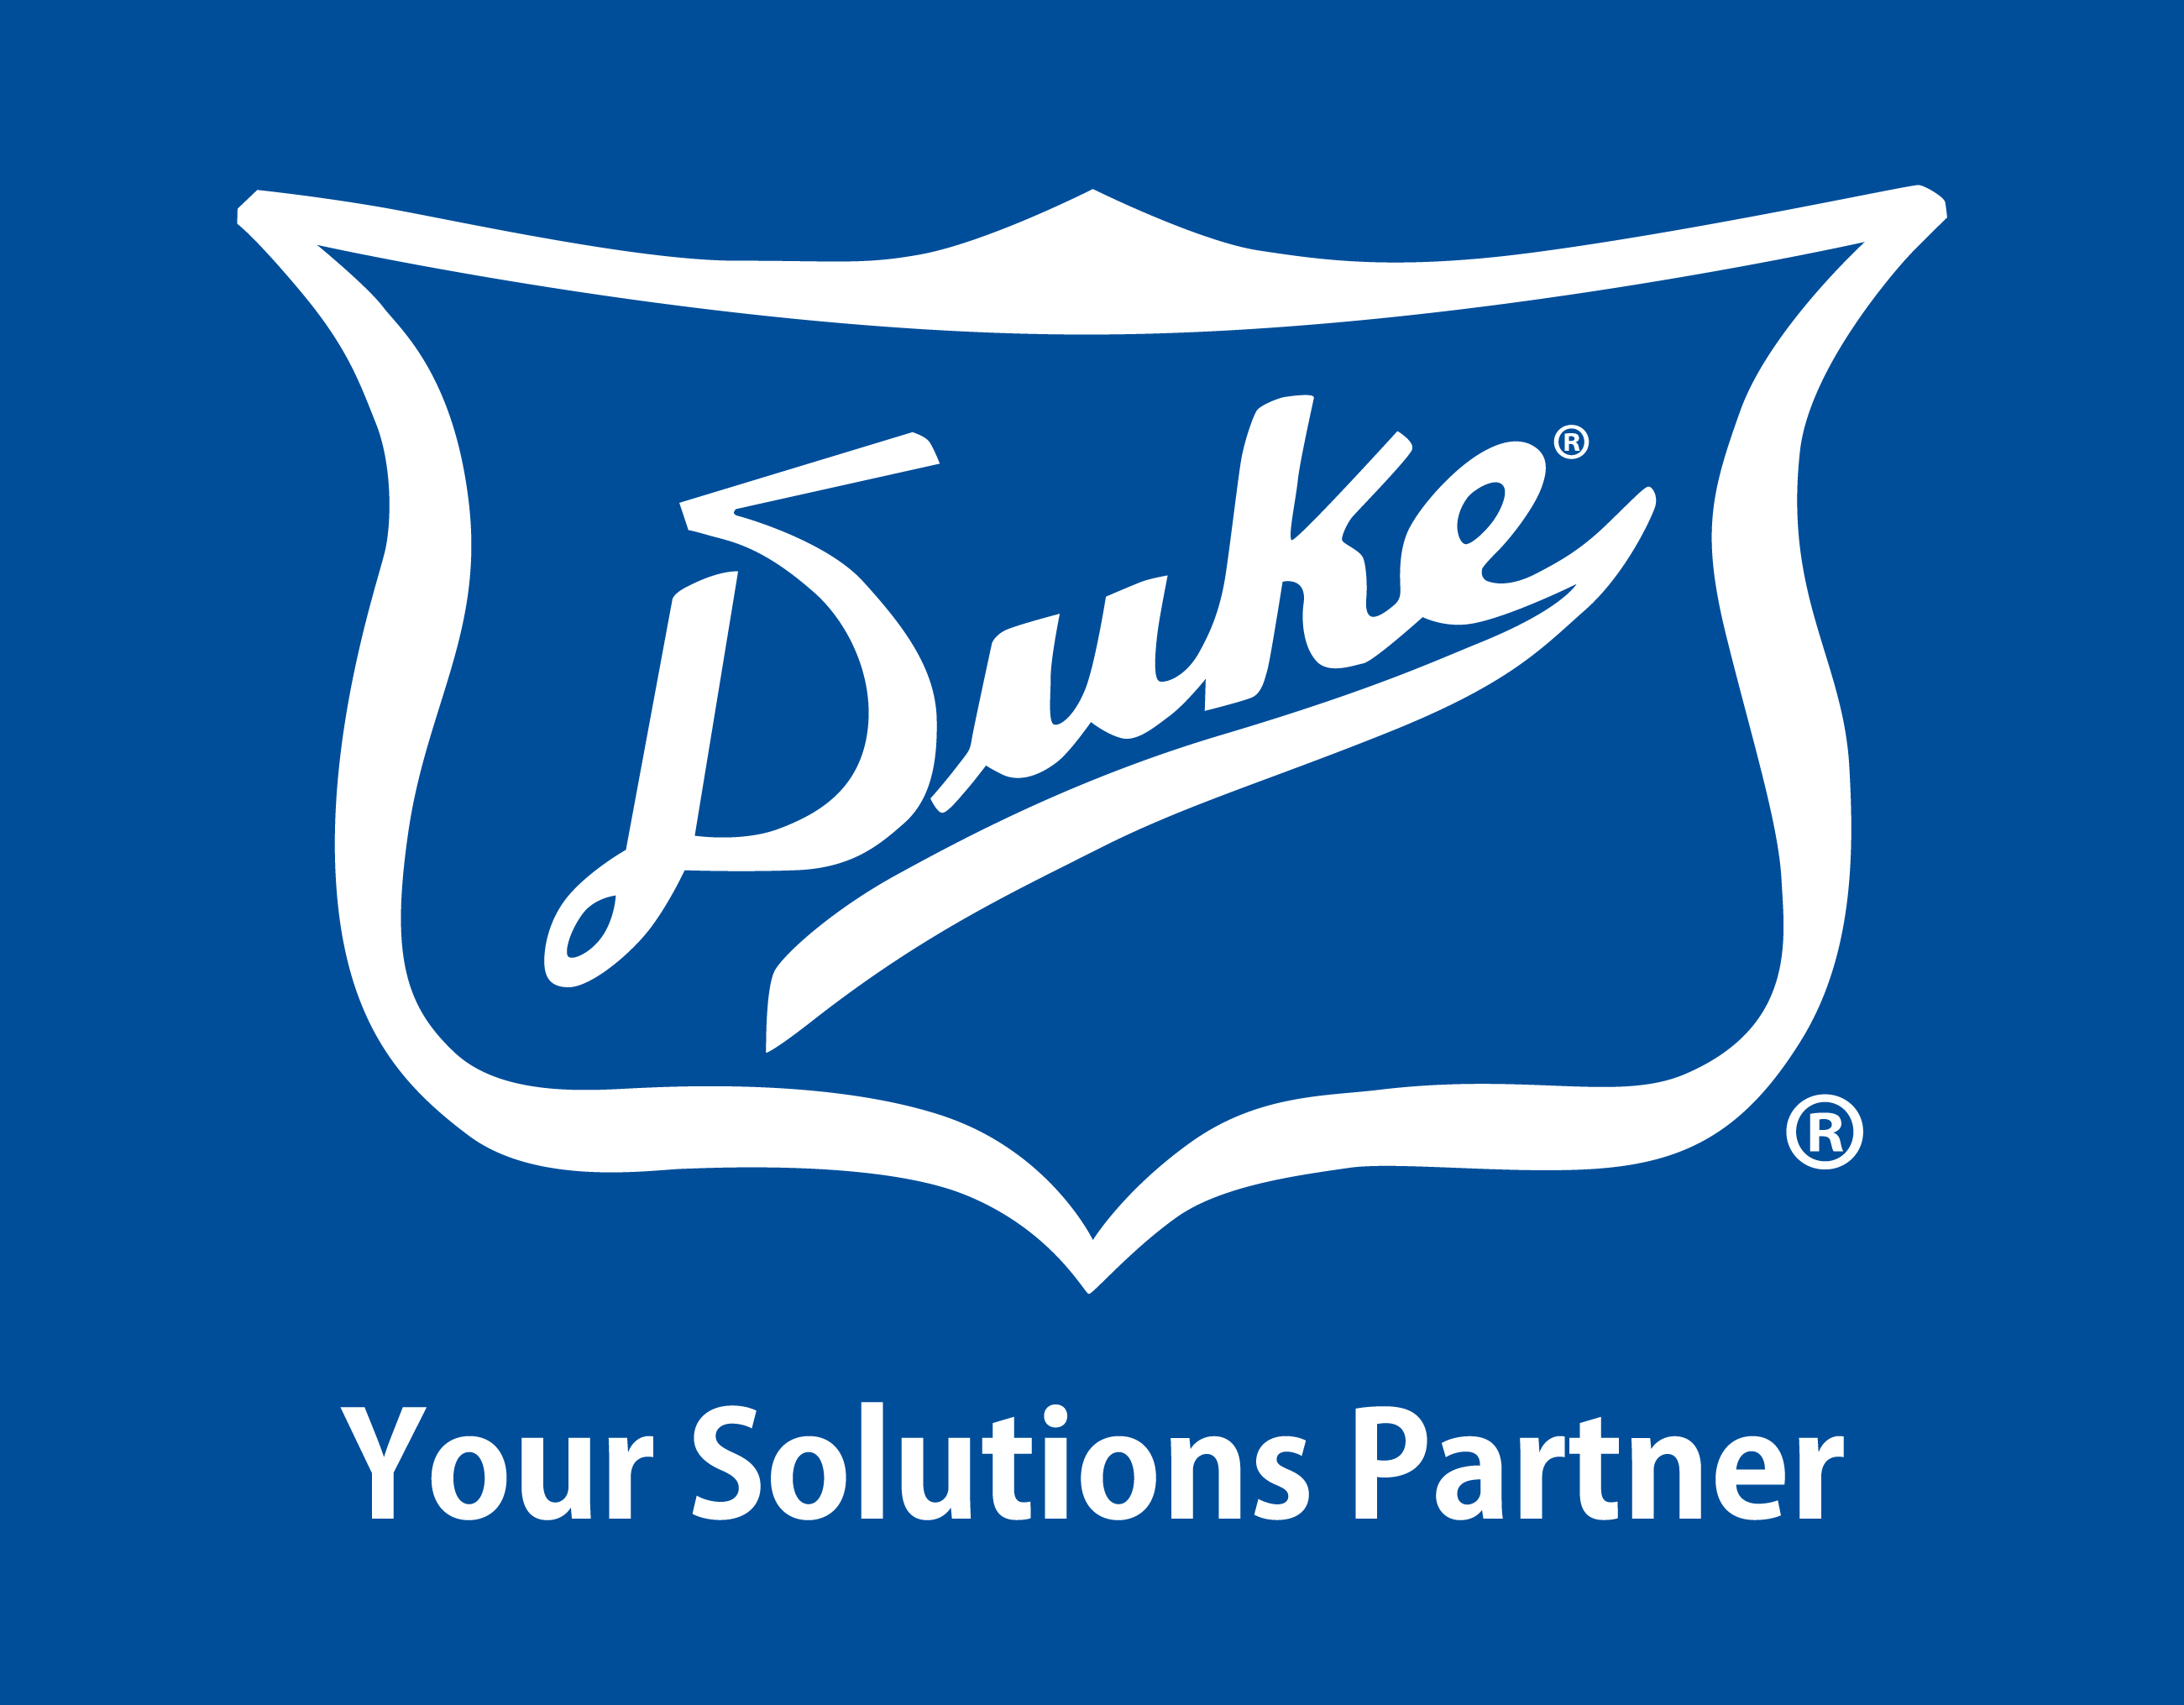 Duke-white-tagline-on-blue-bg